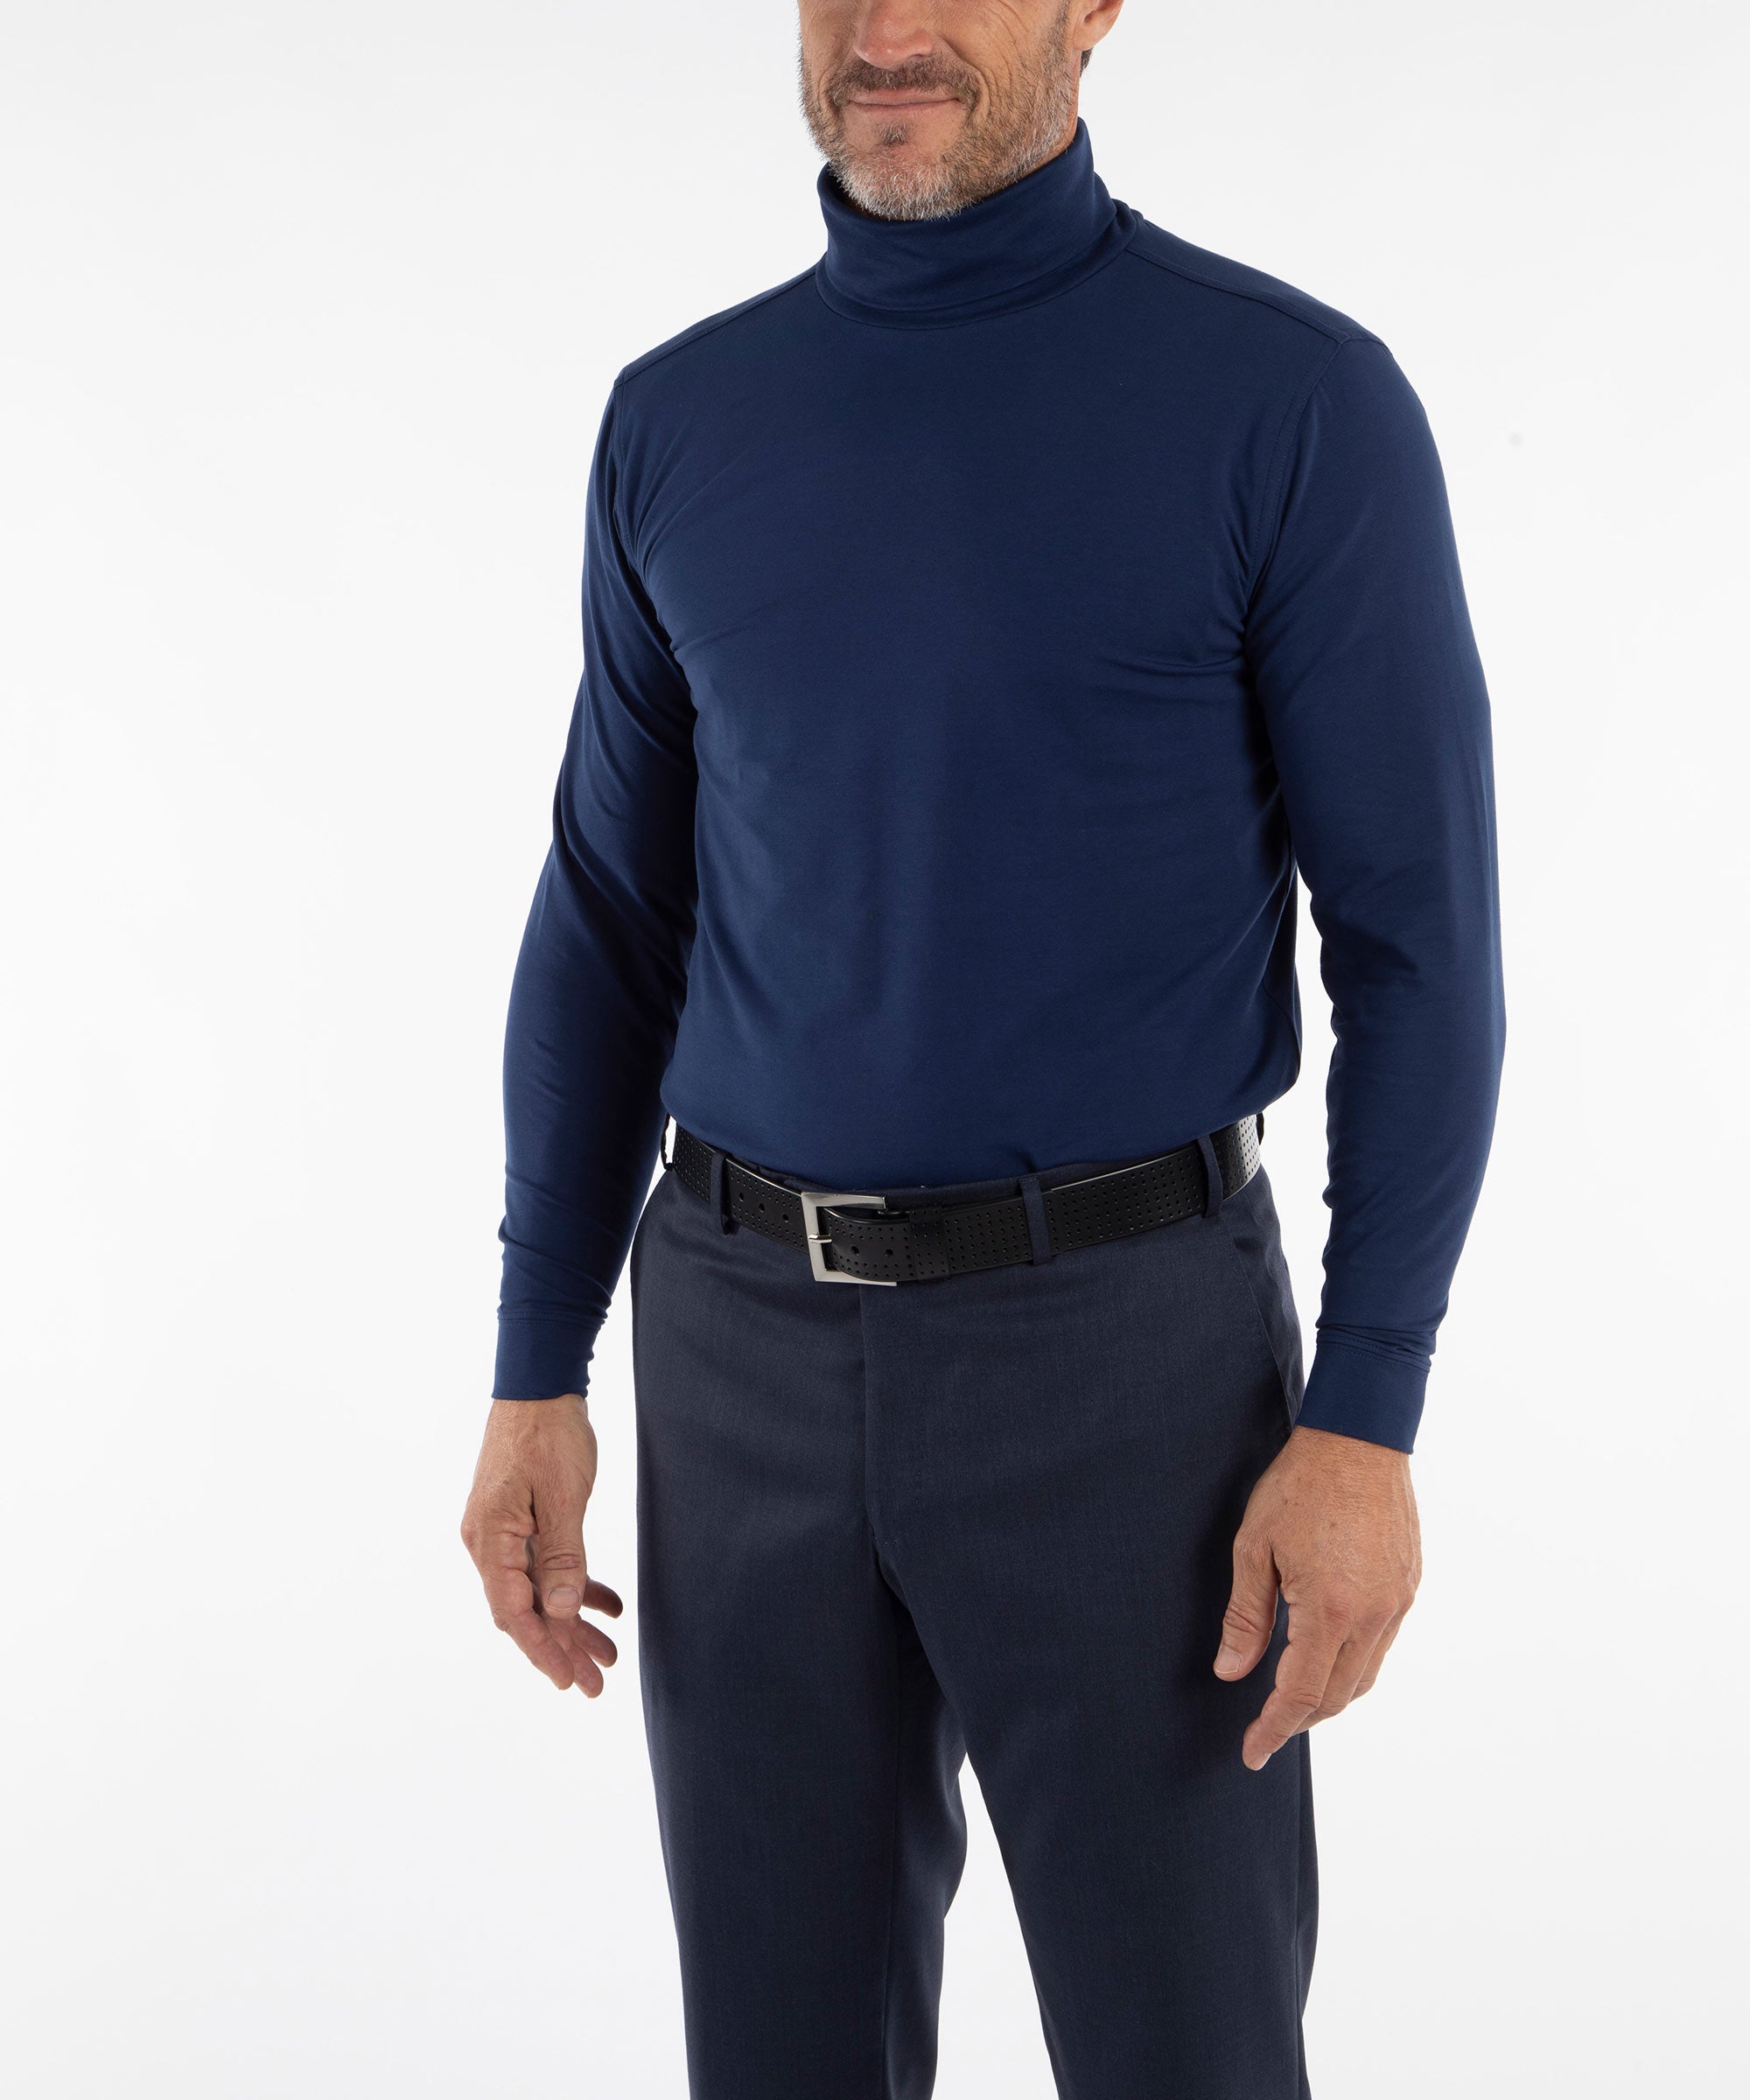 Men's Turtle Neck Winter Sweater, 55% OFF